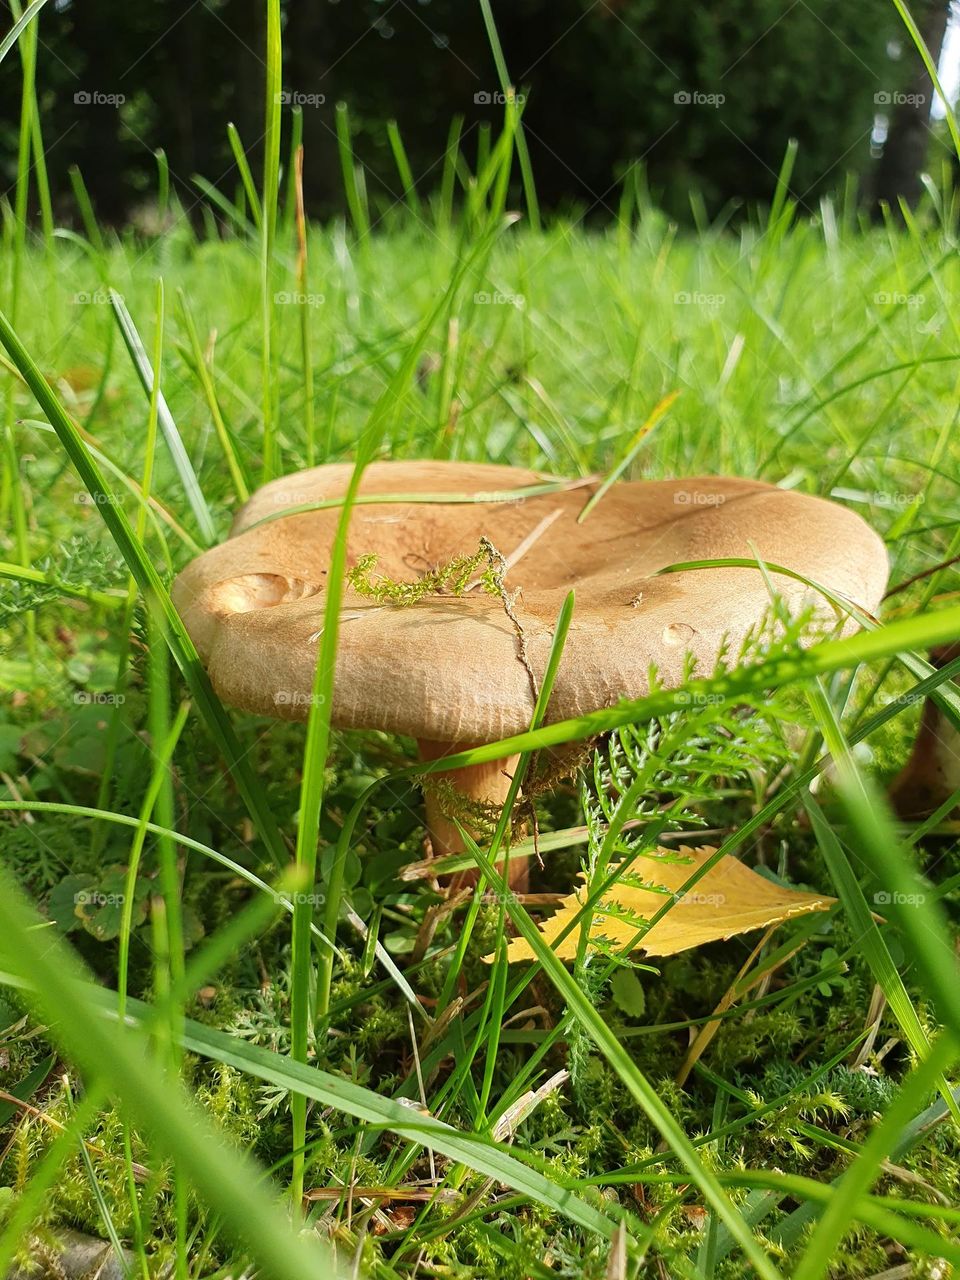 mushroom. but name?